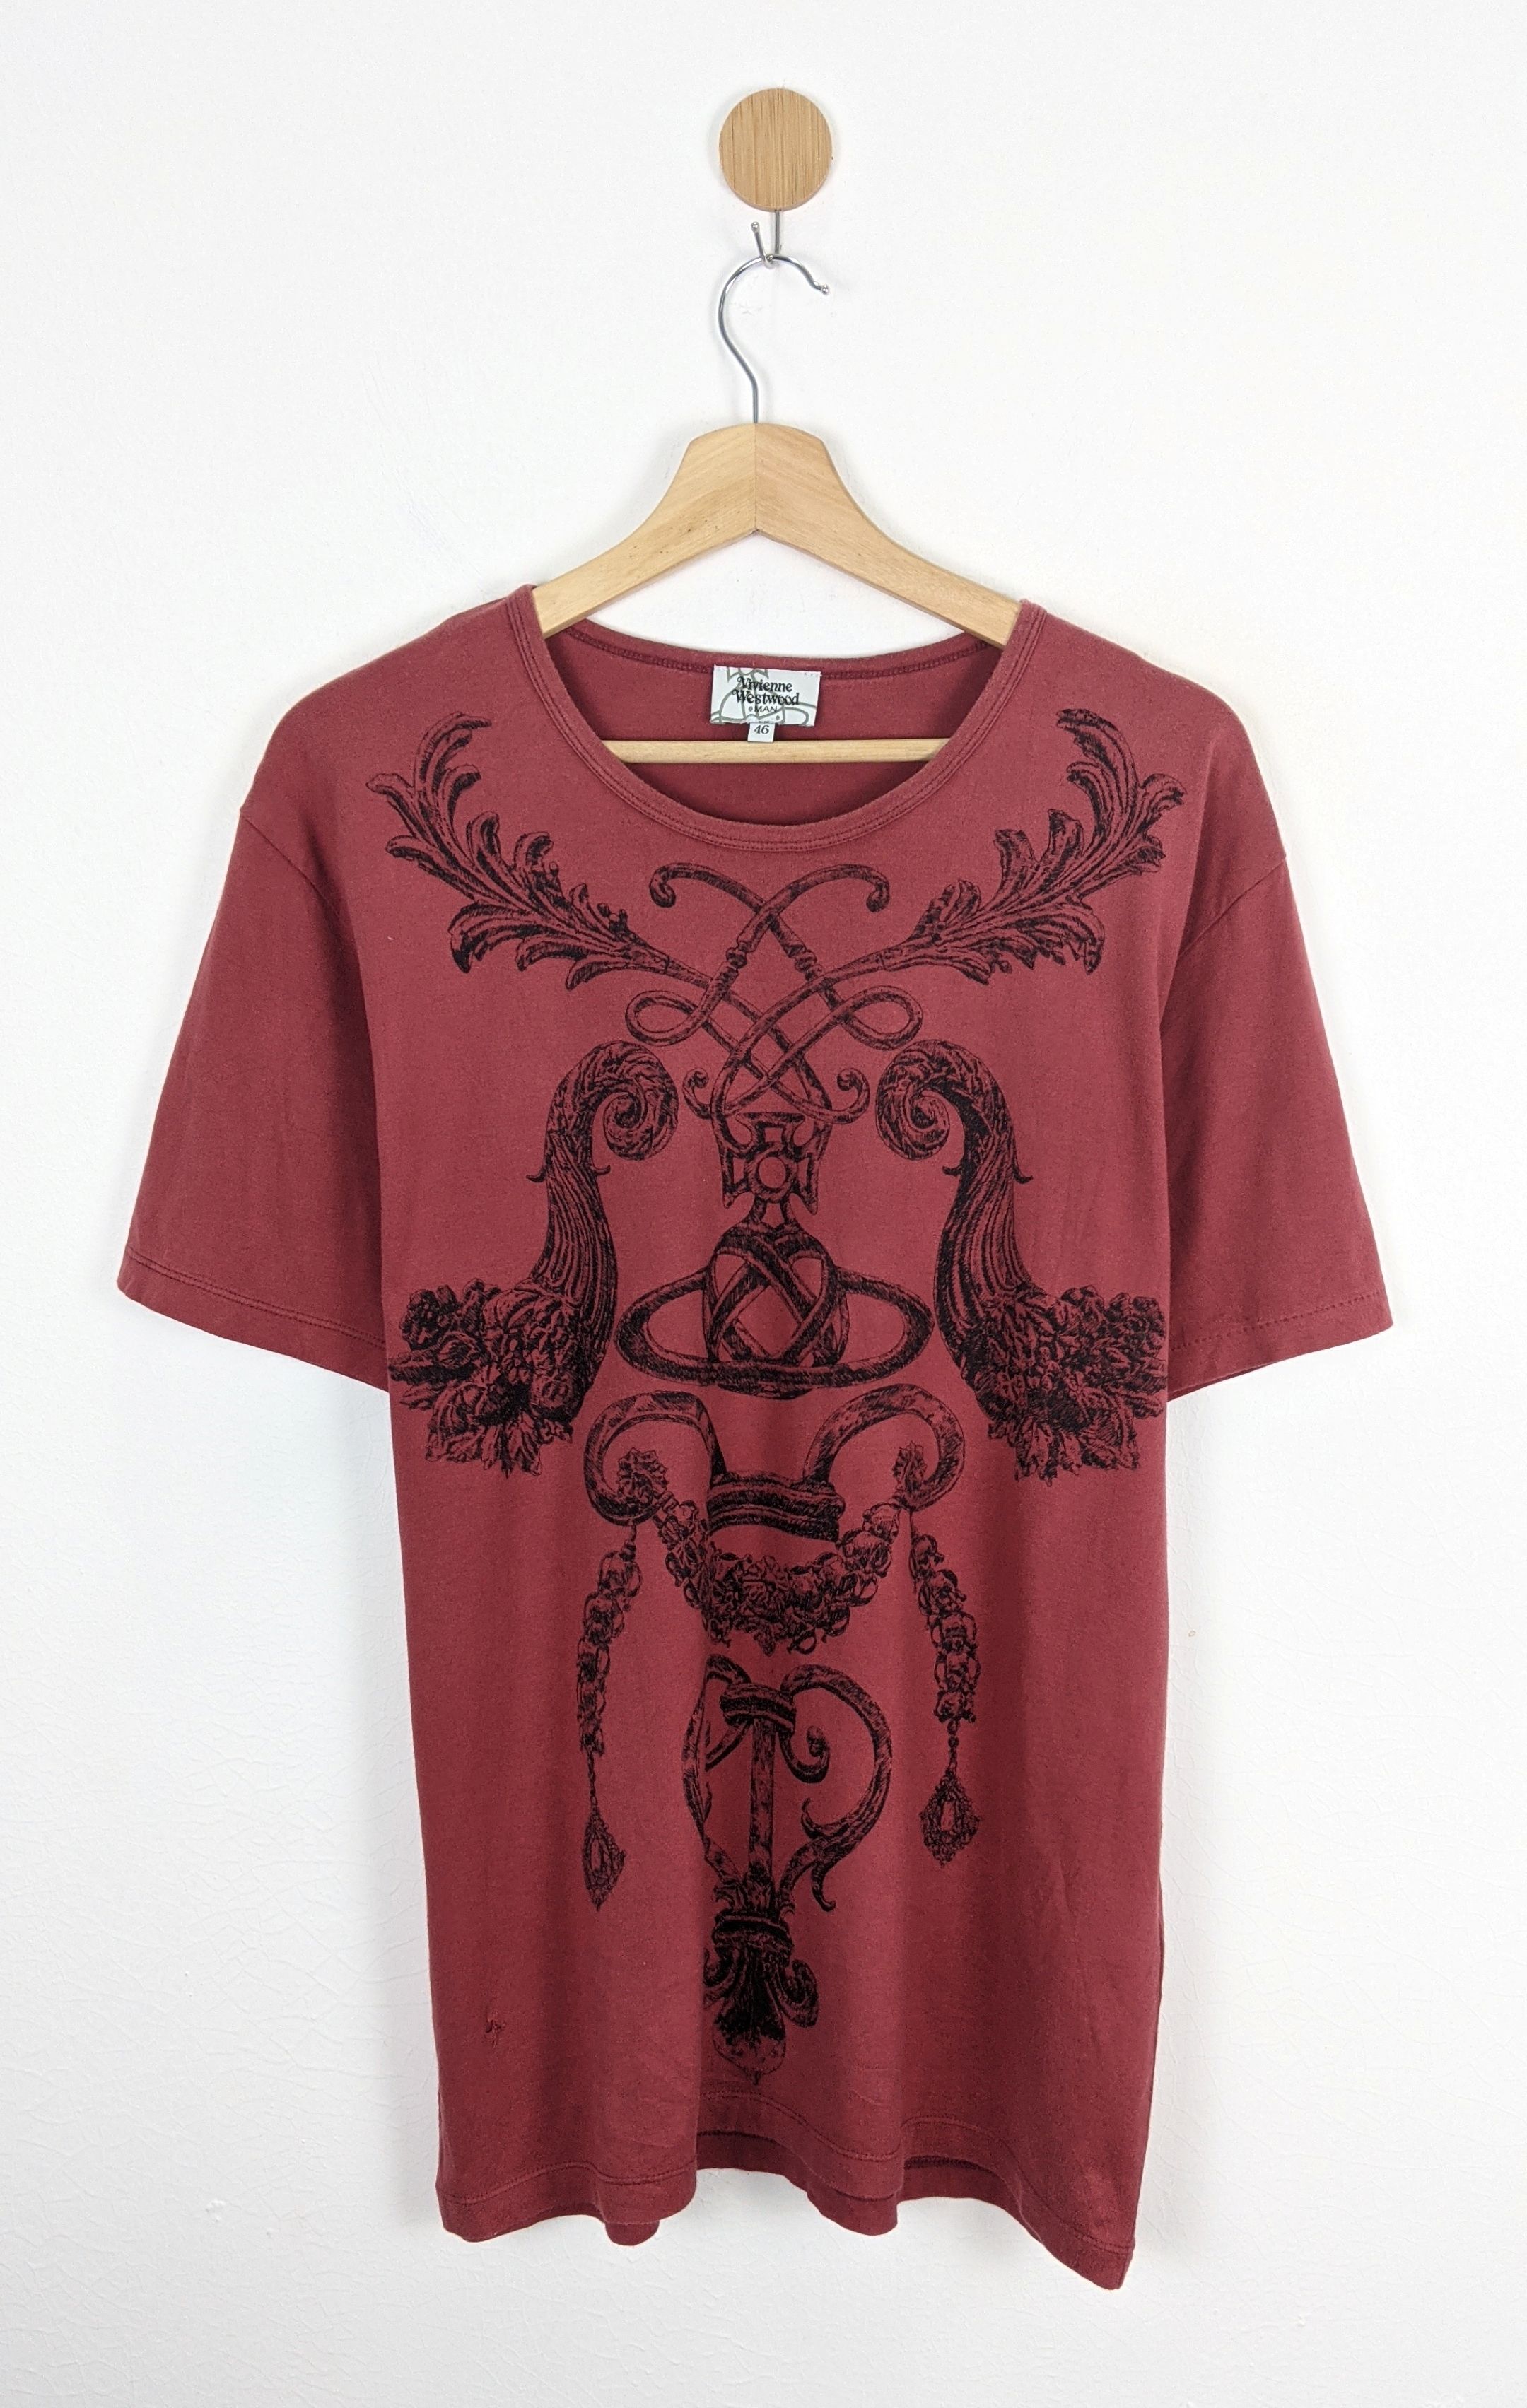 Vivienne Westwood Man shirt - 1